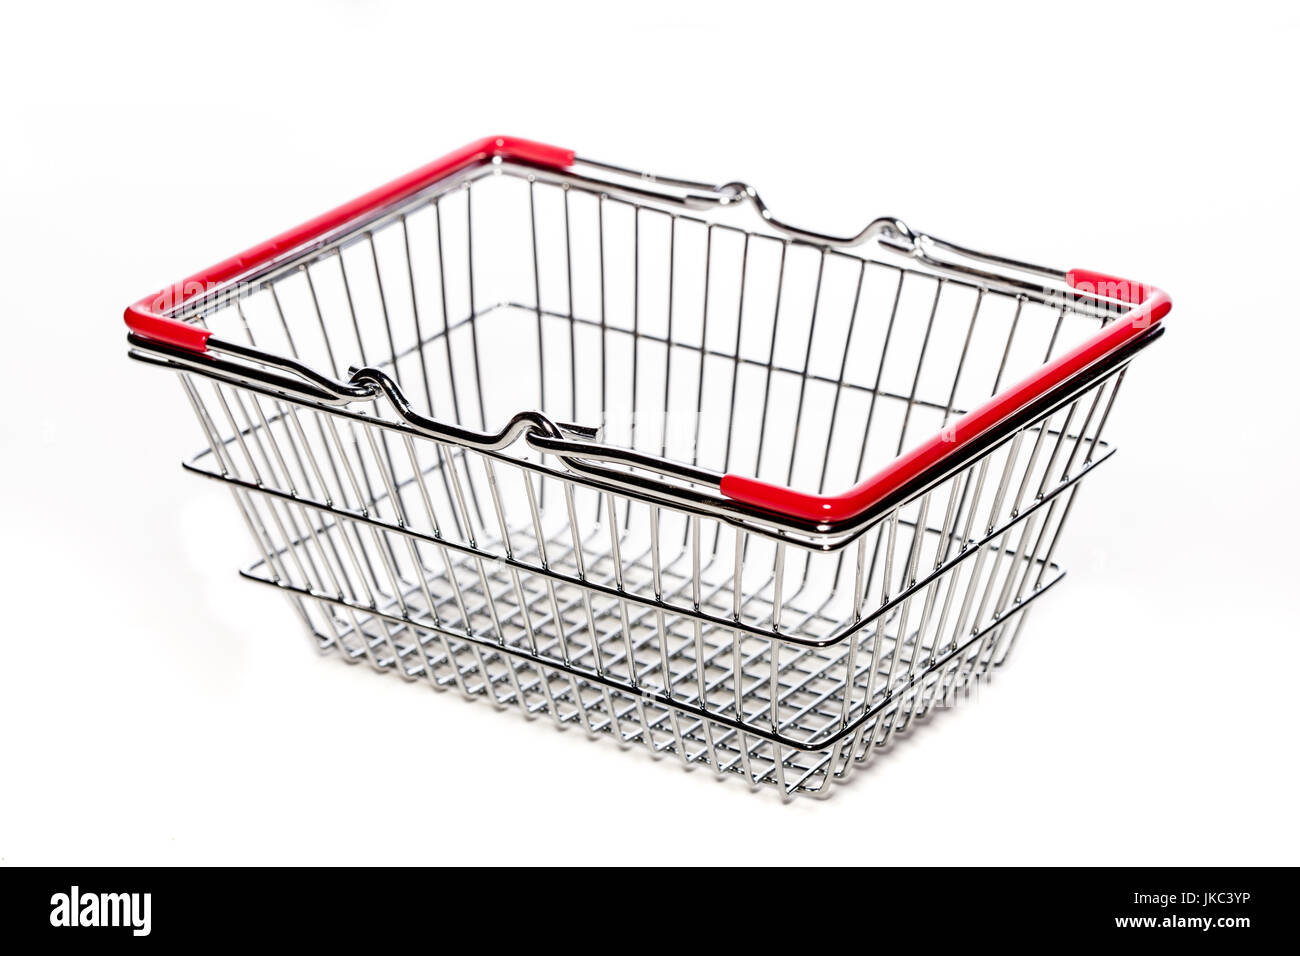 tiny metal shopping basket against white background Stock Photo